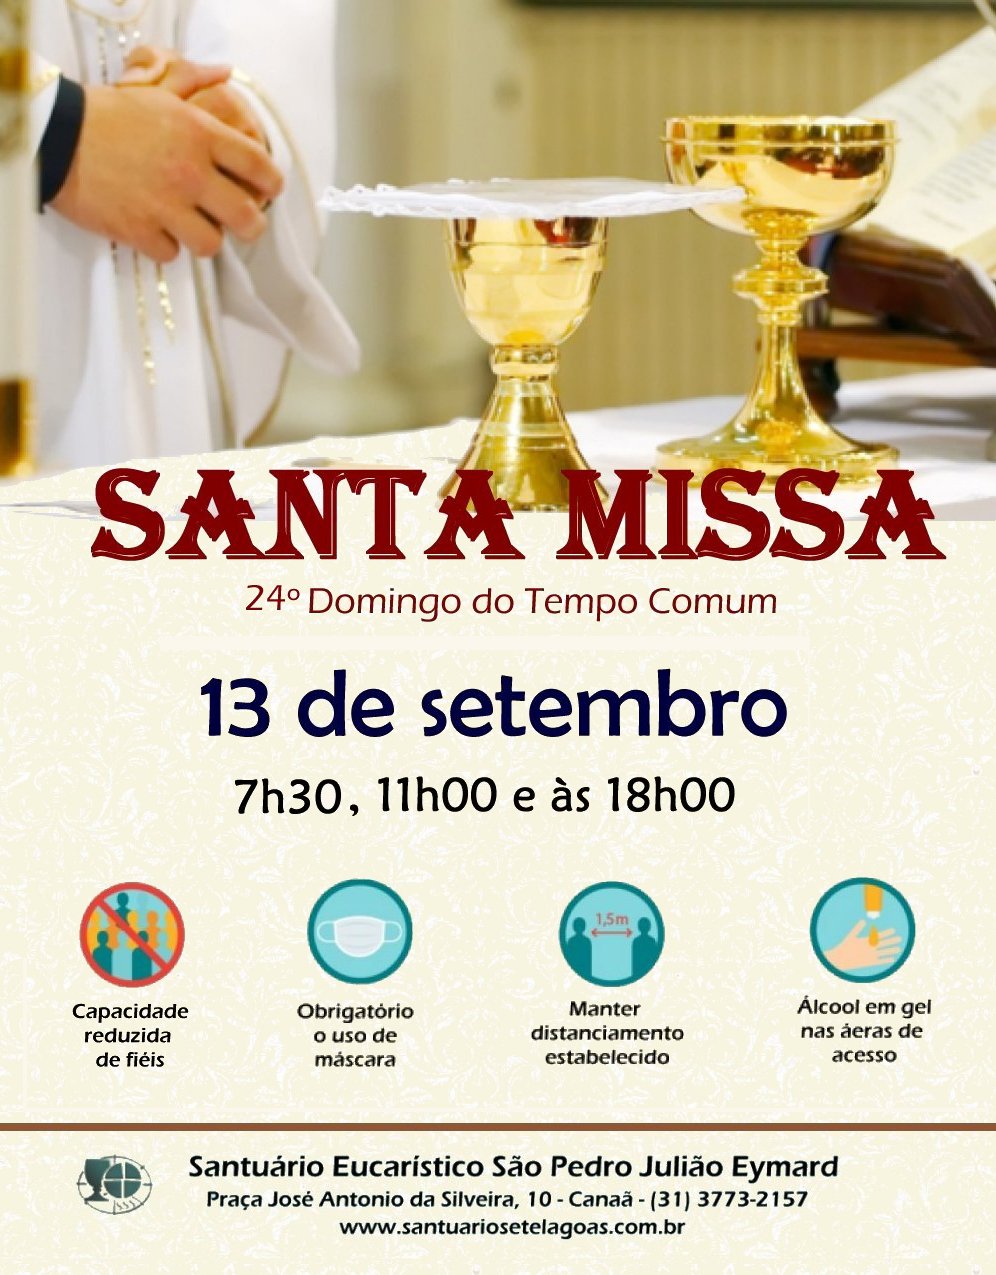 Santa Missa presencial dia 13/09. Participe!